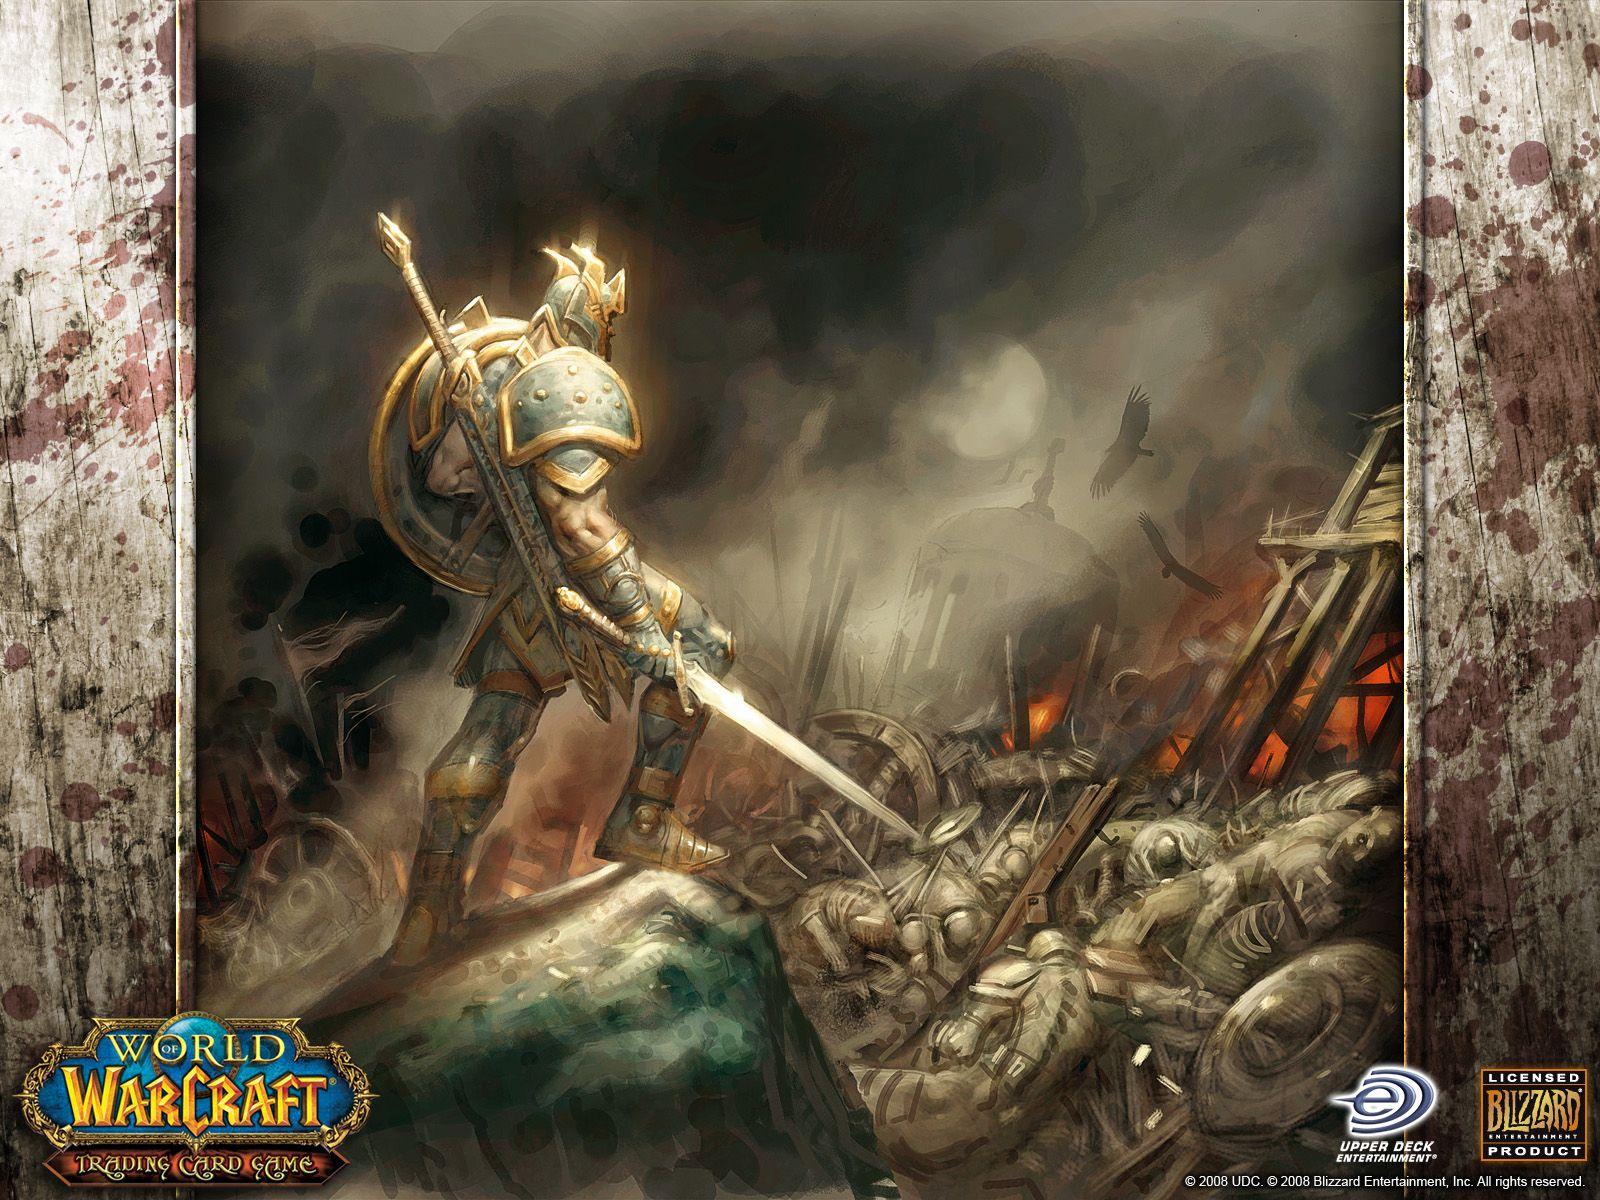 The Wonderful Wallpaper of World of Warcraft